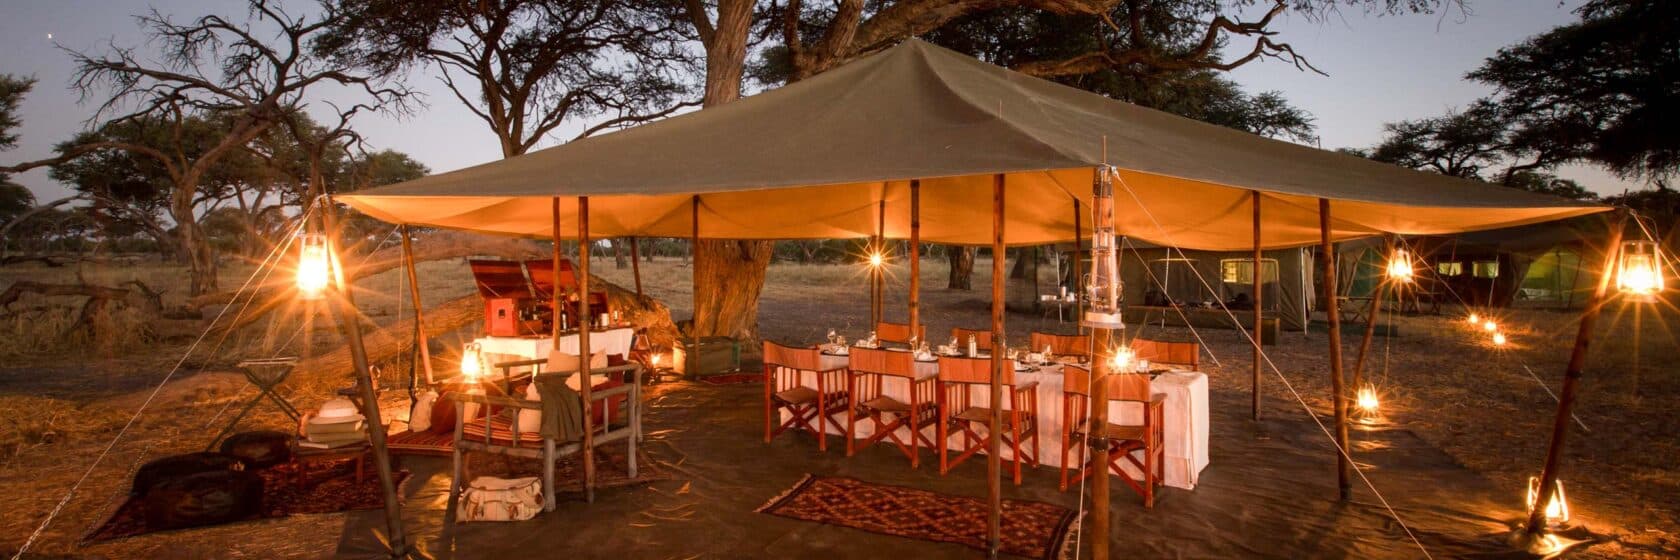 A dining area in a private mobile safari camp in Botswana.